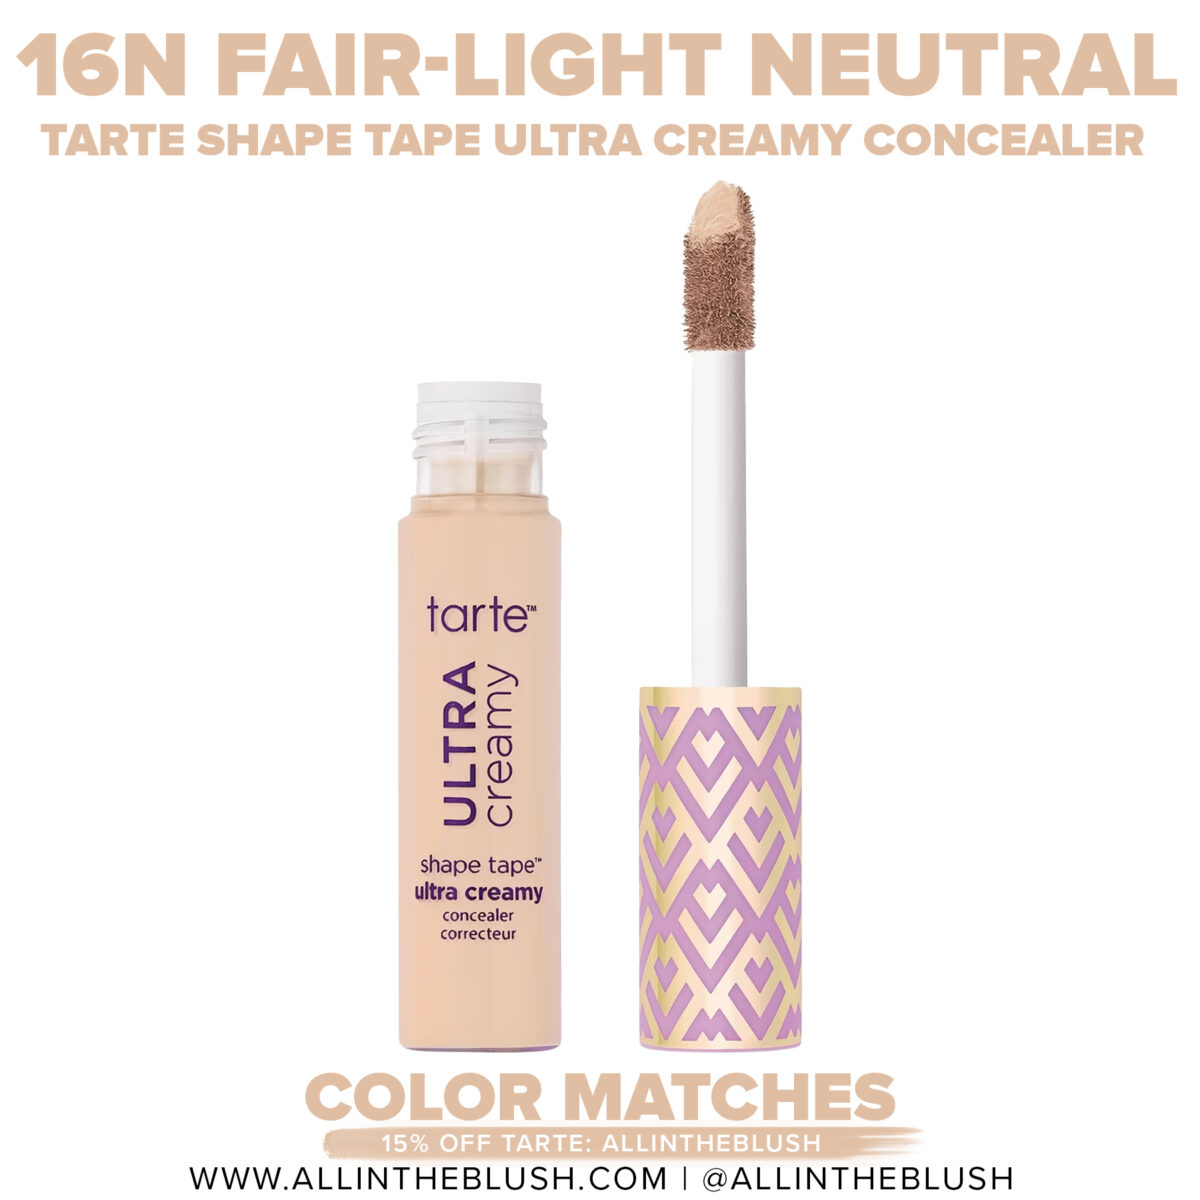 Tarte 16N Fair-Light Neutral Shape Tape Ultra Creamy Concealer Color Matches